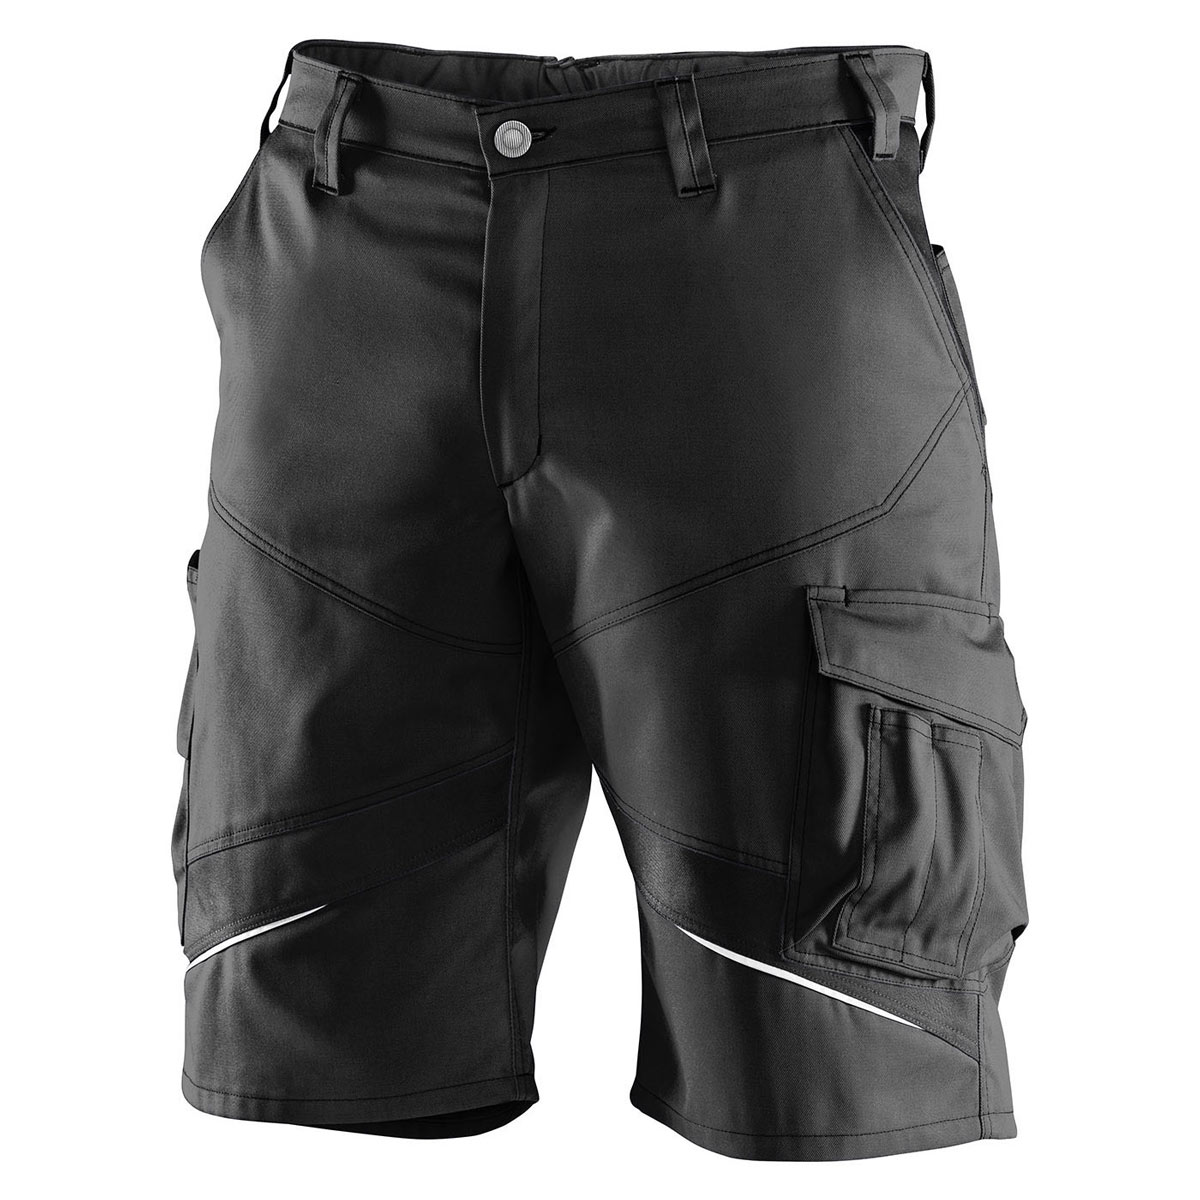 Kübler Activiq Shorts - 1